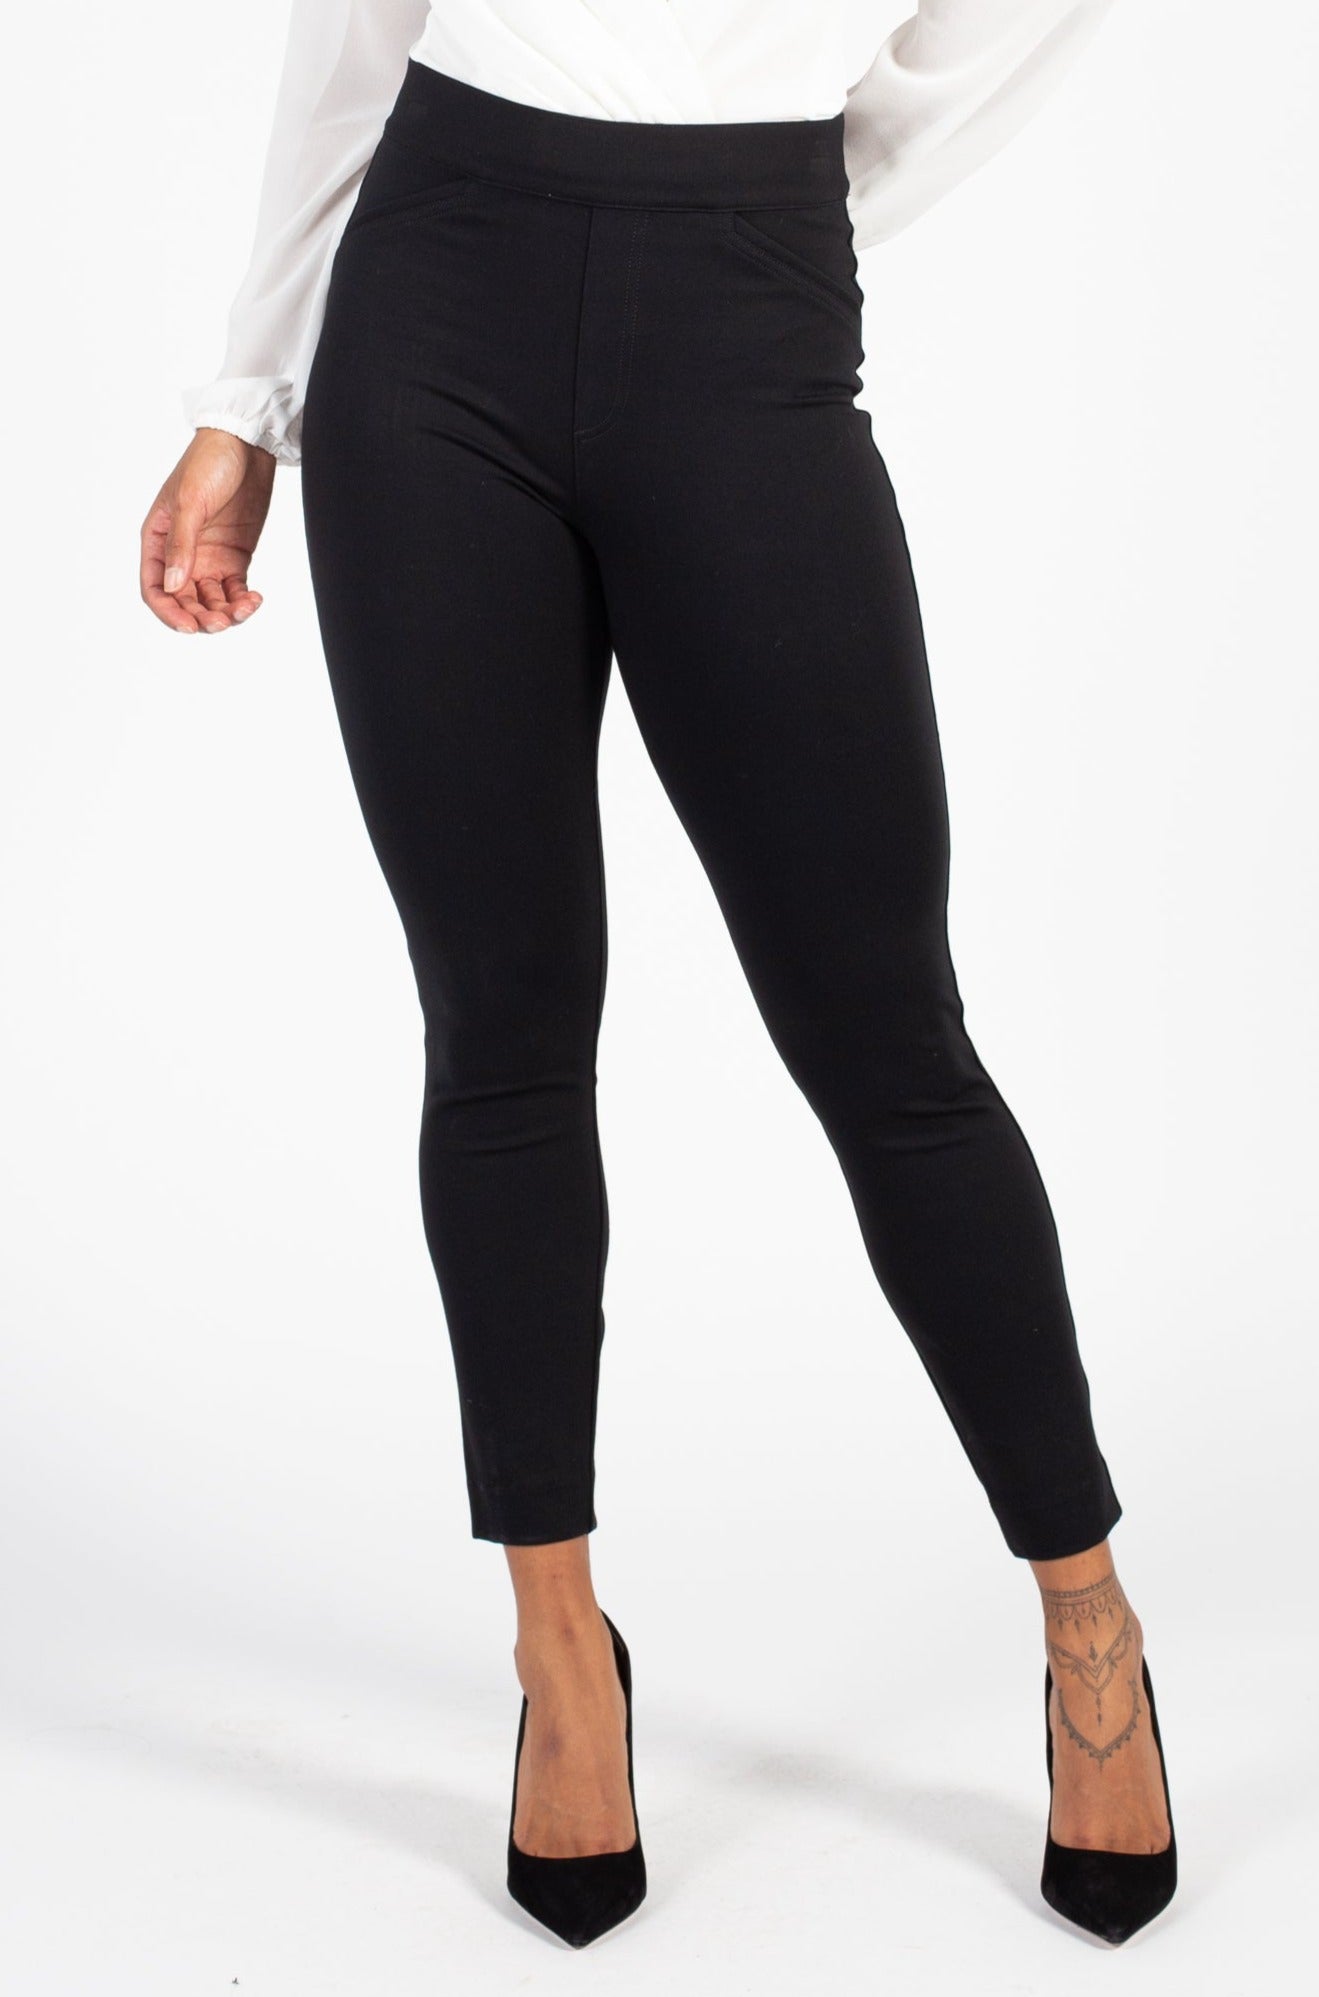 Spanx NWT Women's Size XL Inseam 25 Black Nylon Spandex Leggings QVC Outlet